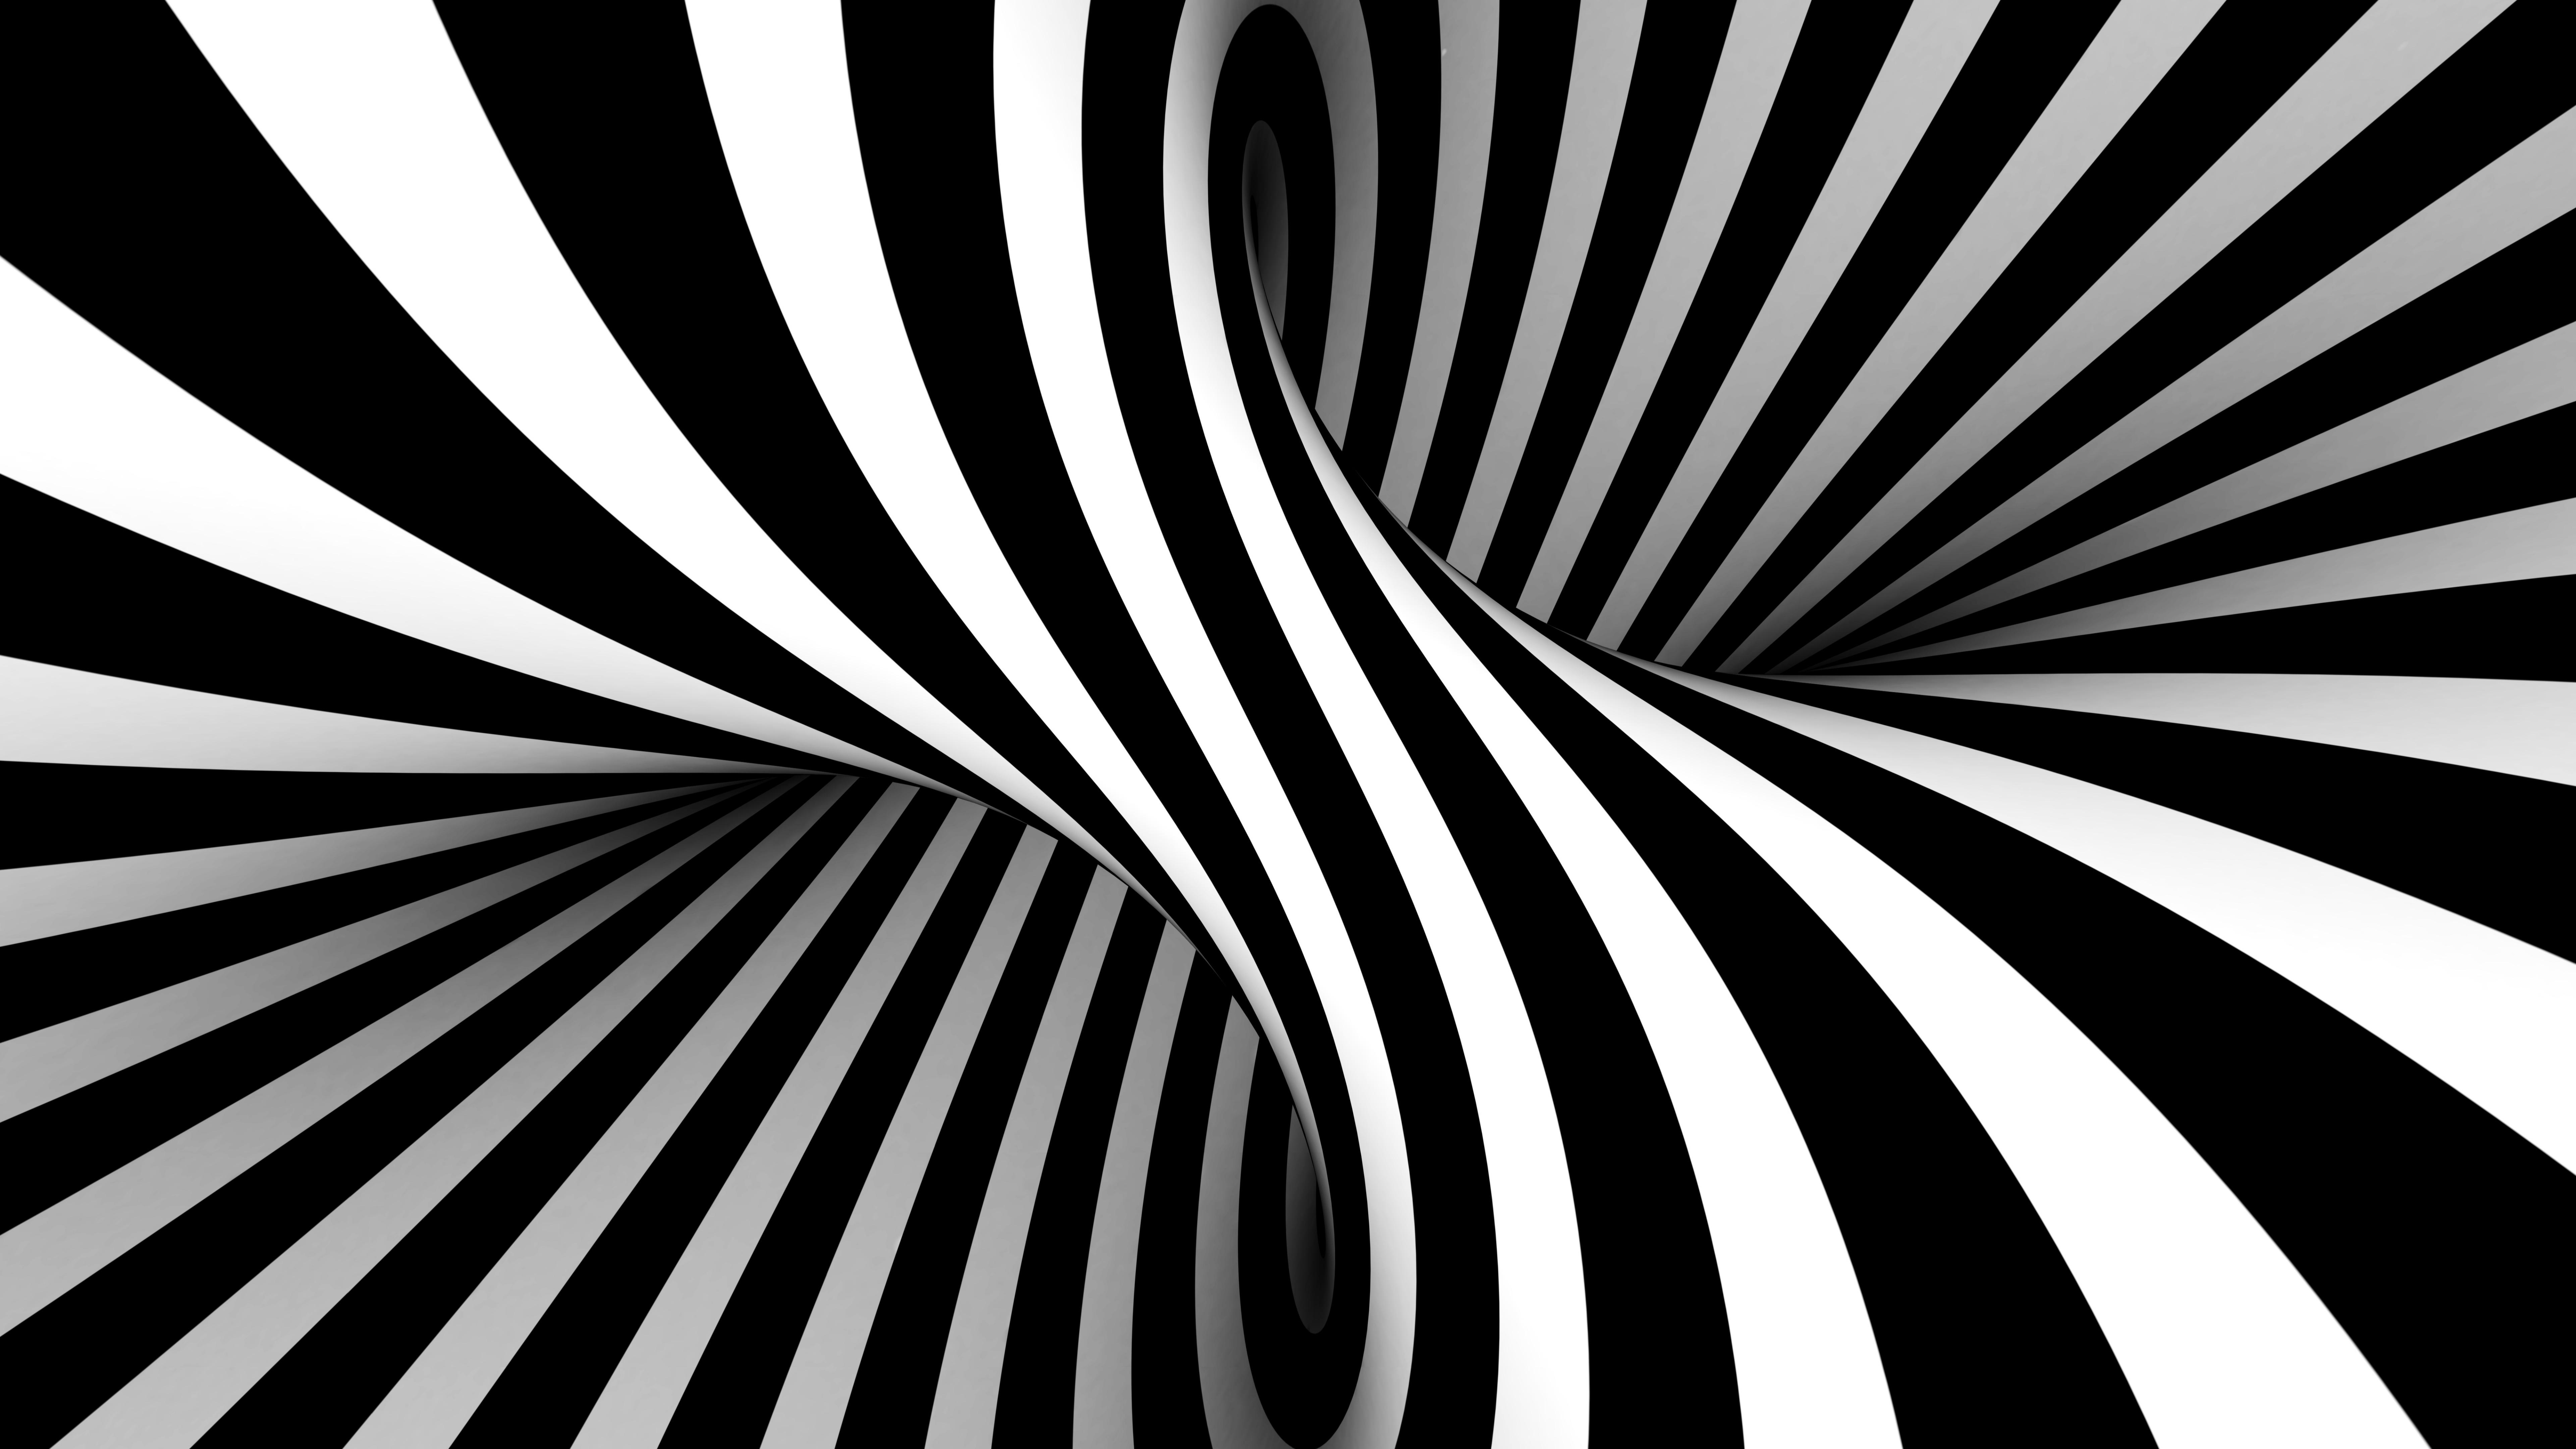 Download wallpaper 3840x2400 illusion, stripes, twisting, abstraction 4k  wallaper, 4k ultra hd 16:10 wallpaper, 3840x2400 hd background, 24716